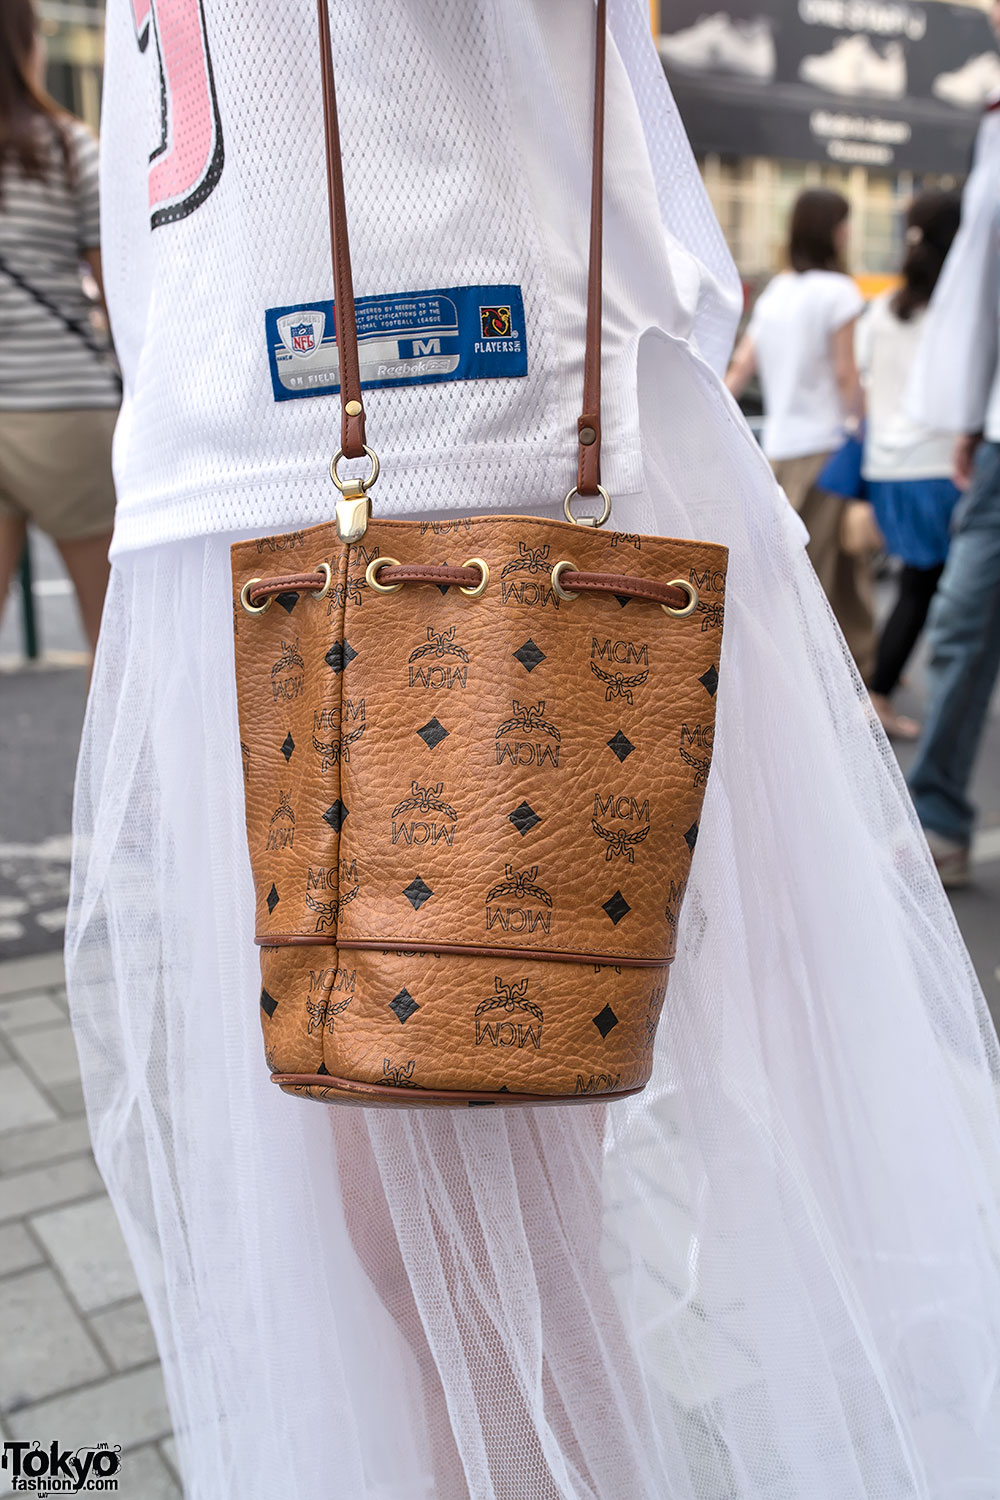 MCM Bucket Bag in Harajuku – Tokyo Fashion